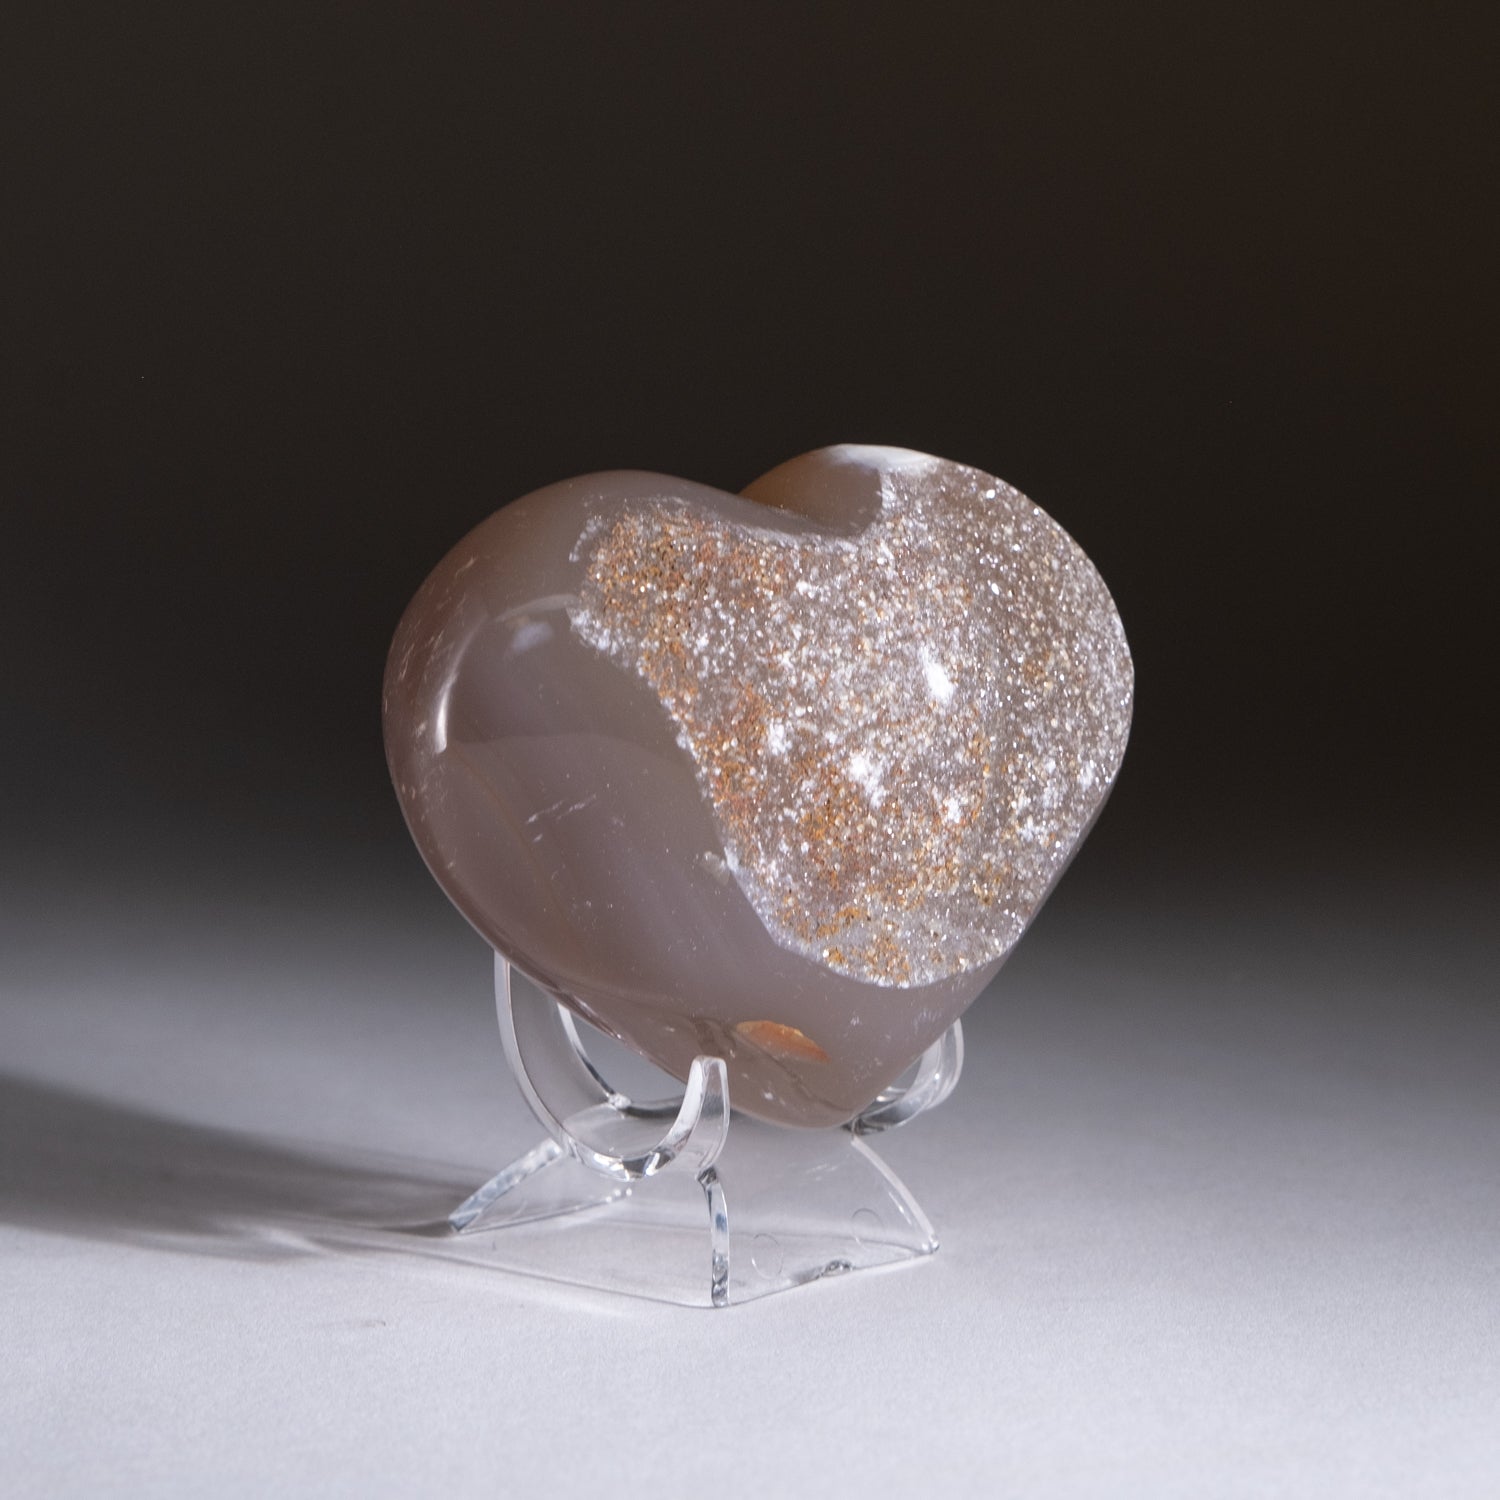 Druzy Quartz Banded Agate Heart from Uruguay (349 grams)